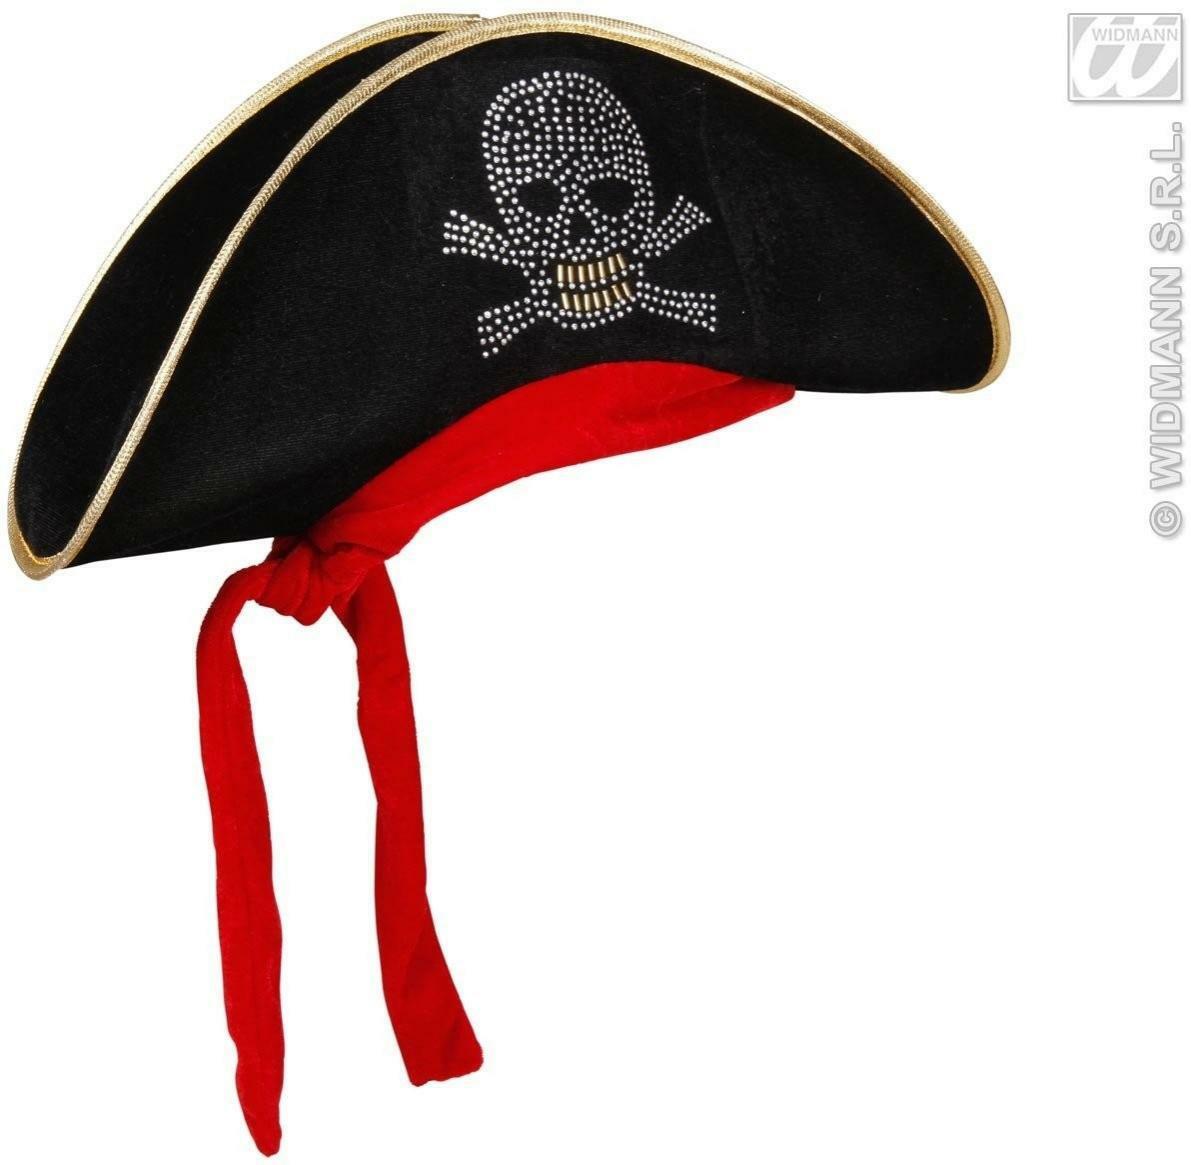 widmann cappello pirata teschio borchiato